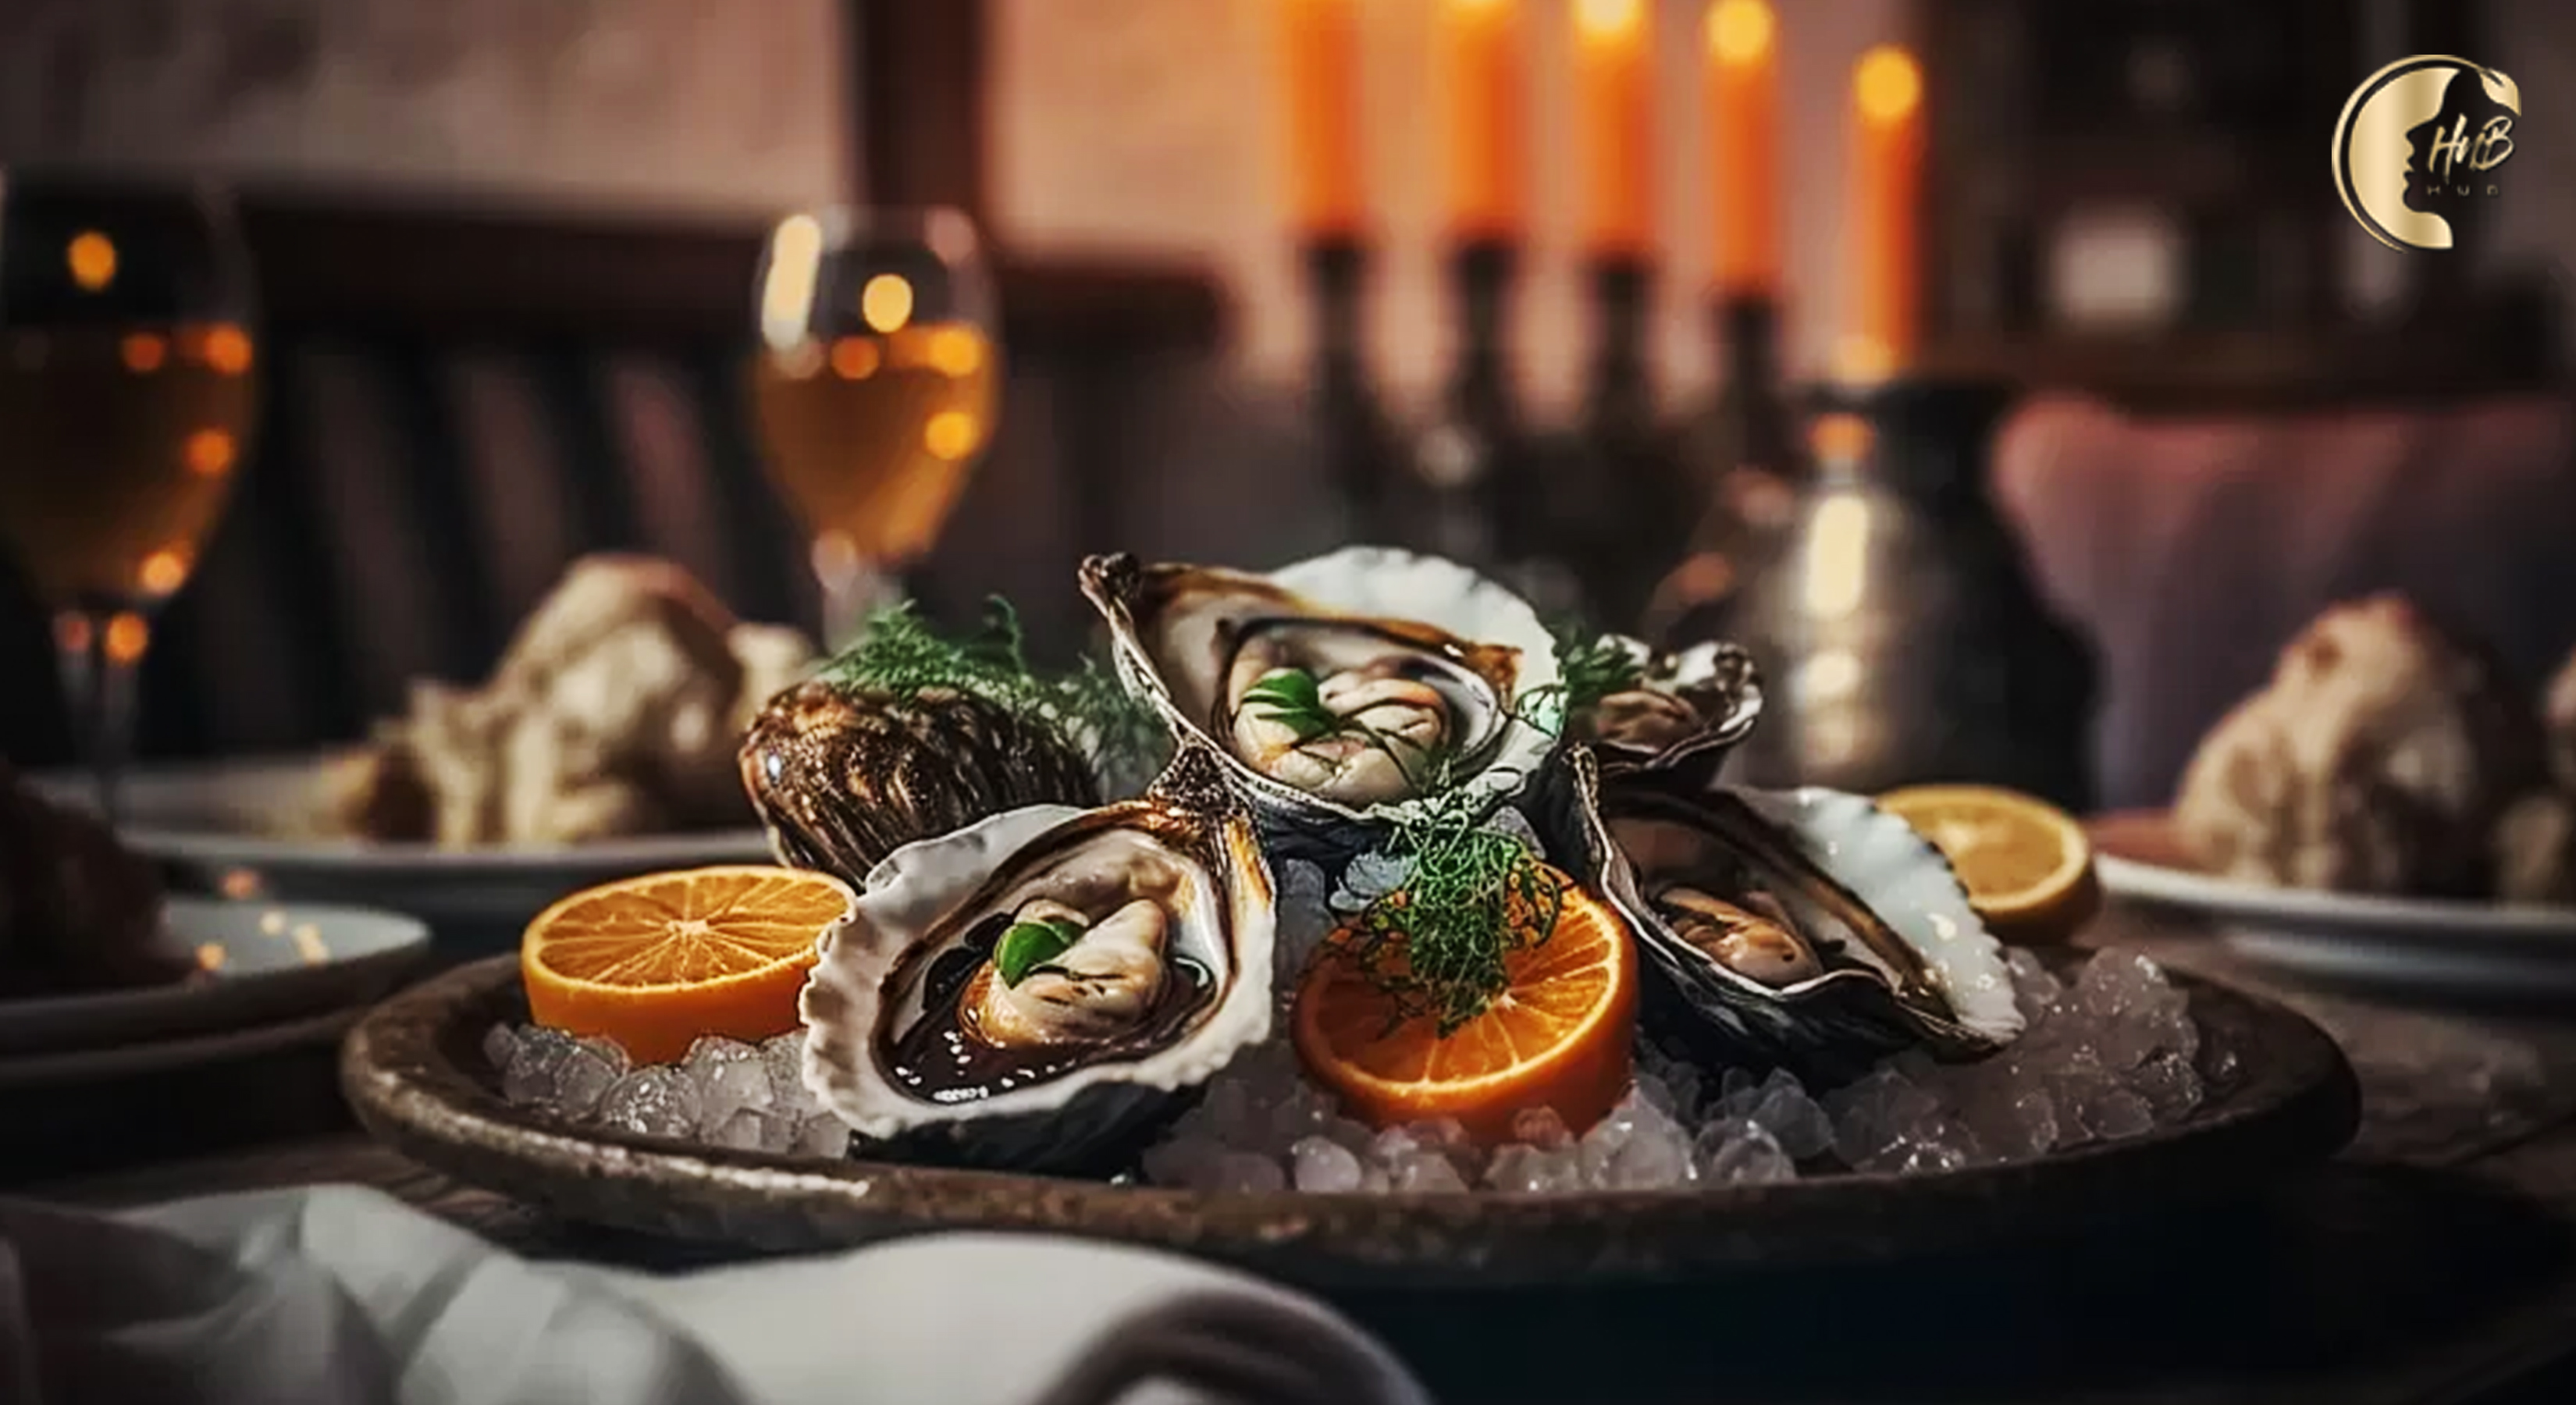 Oysters for increase Libido । Health n Beauty HuB